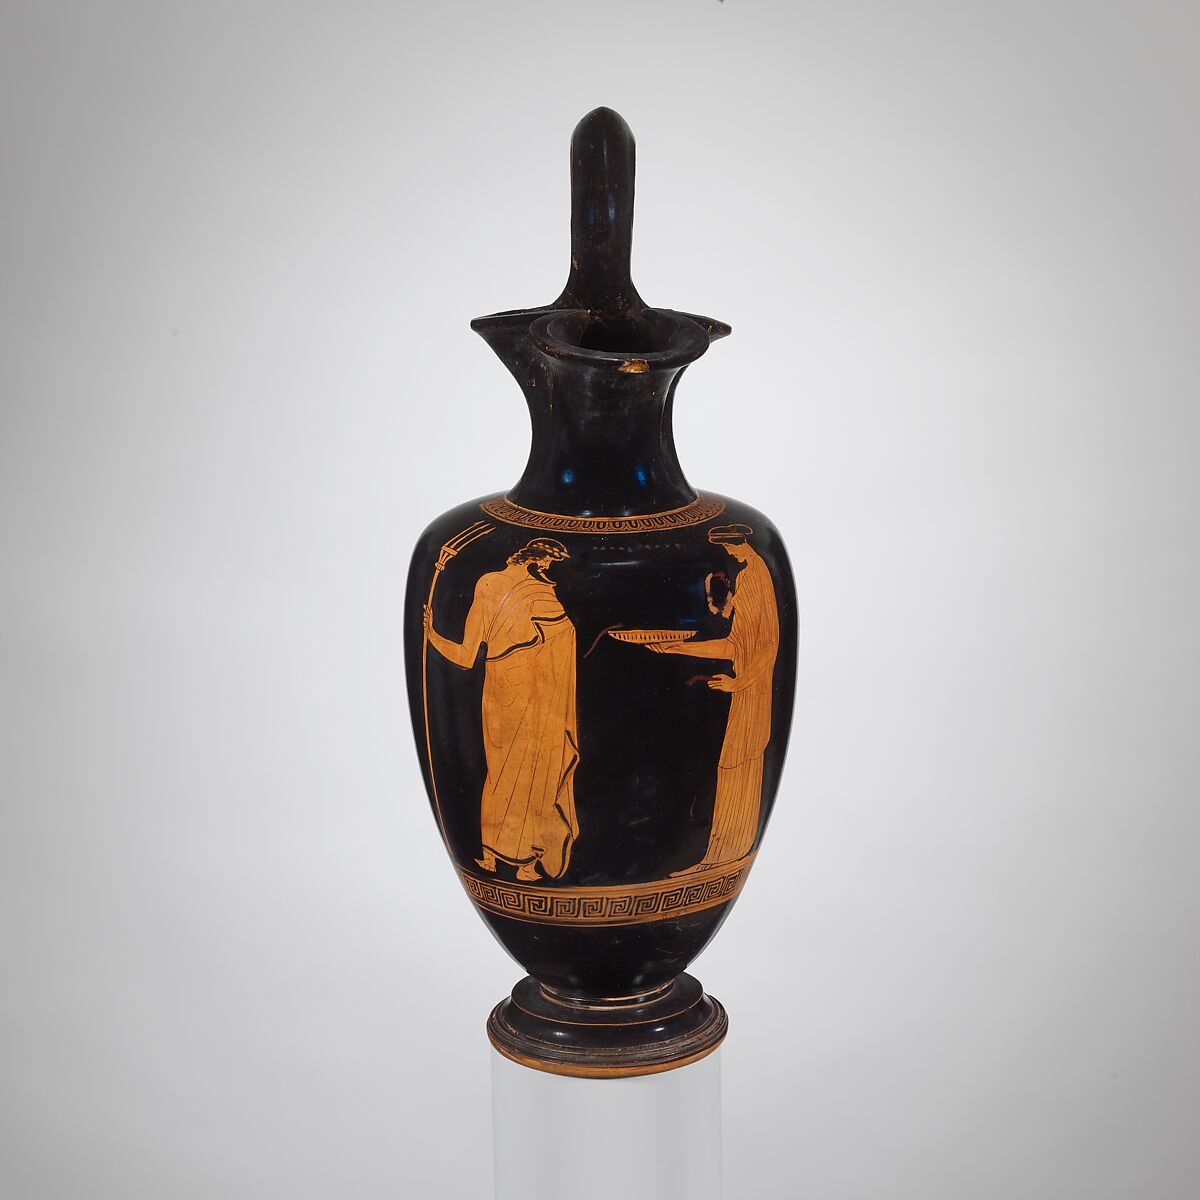 Terracotta oinochoe (jug), Attributed to the Richmond Painter, Terracotta, Greek, Attic 